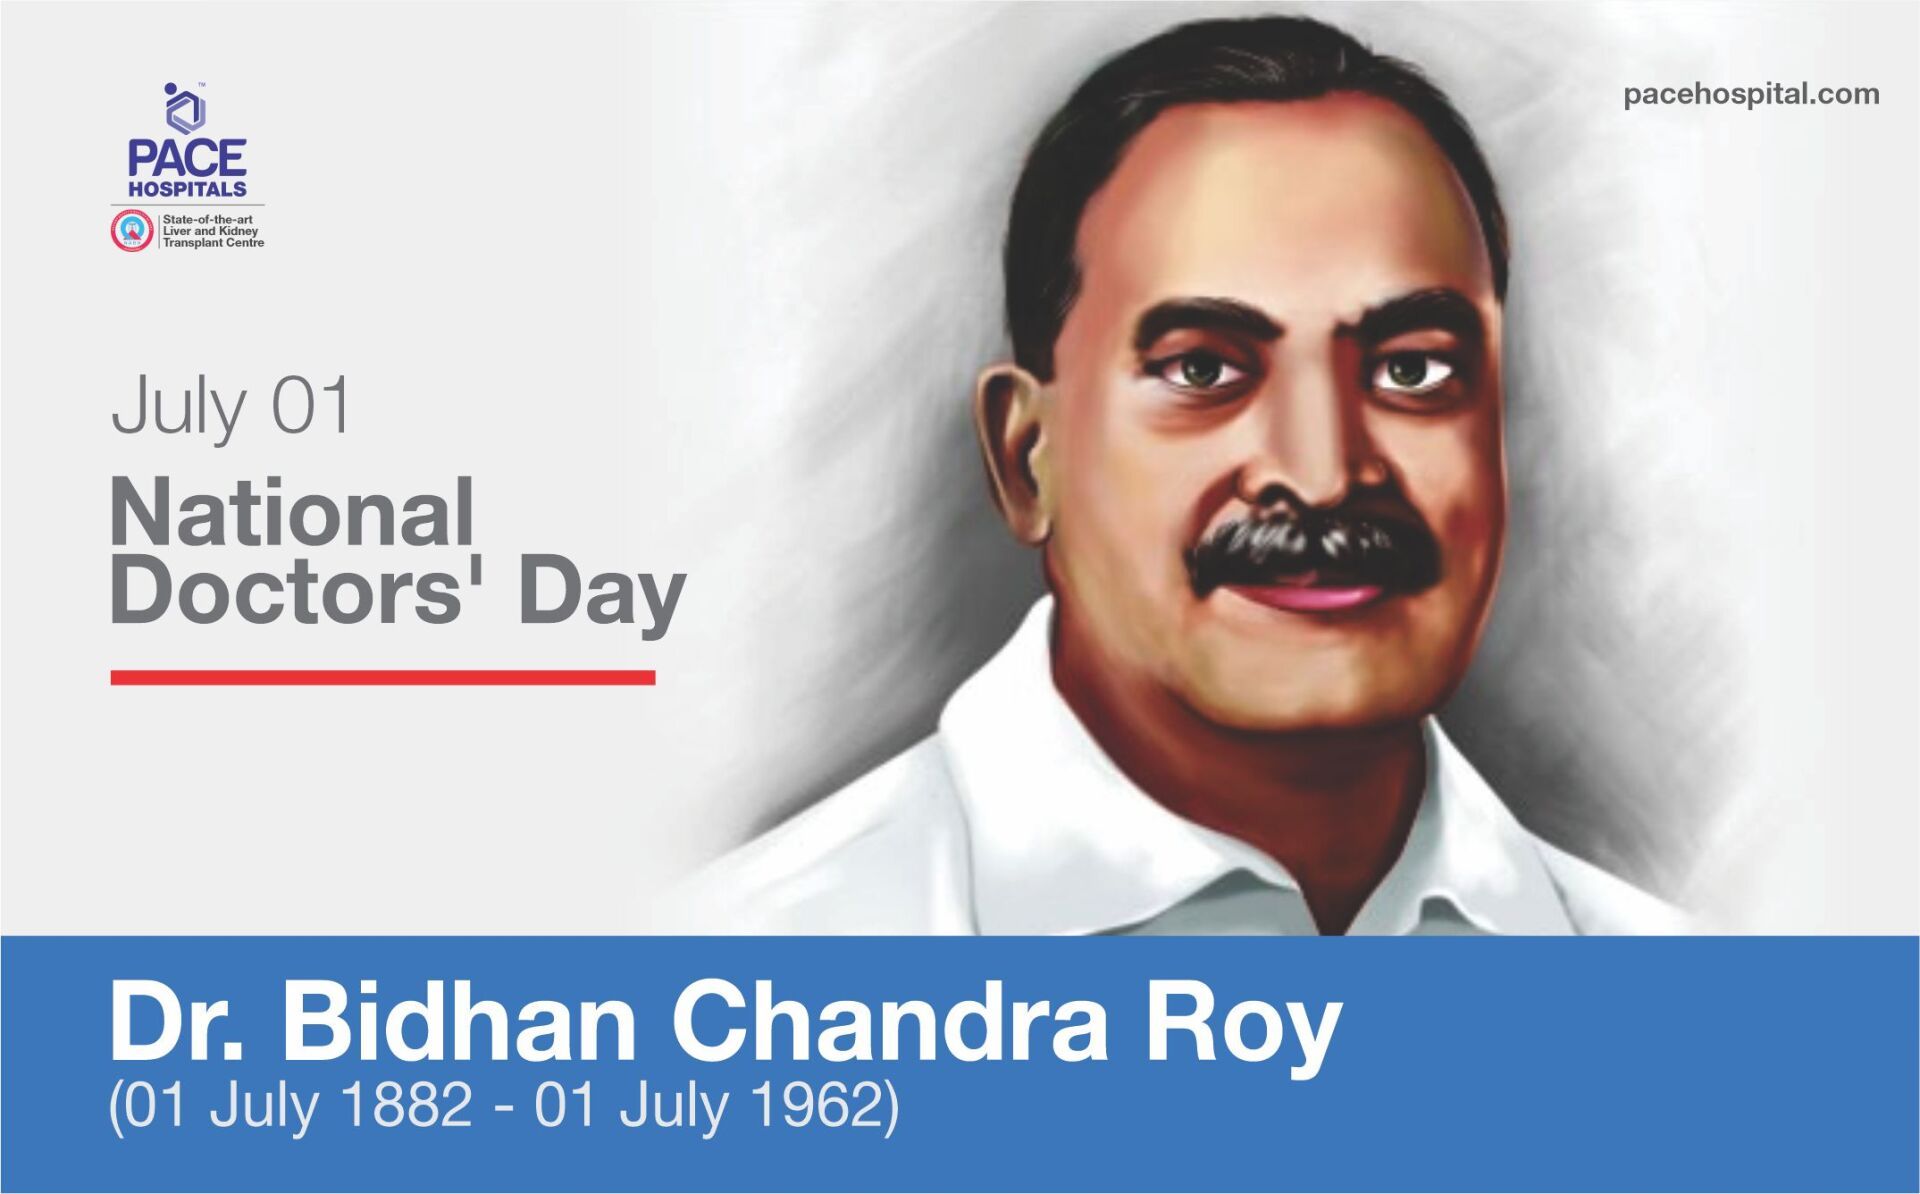 THE BHARAT RATNA - Dr. Bidhan Chandra Roy - National Doctors' Day